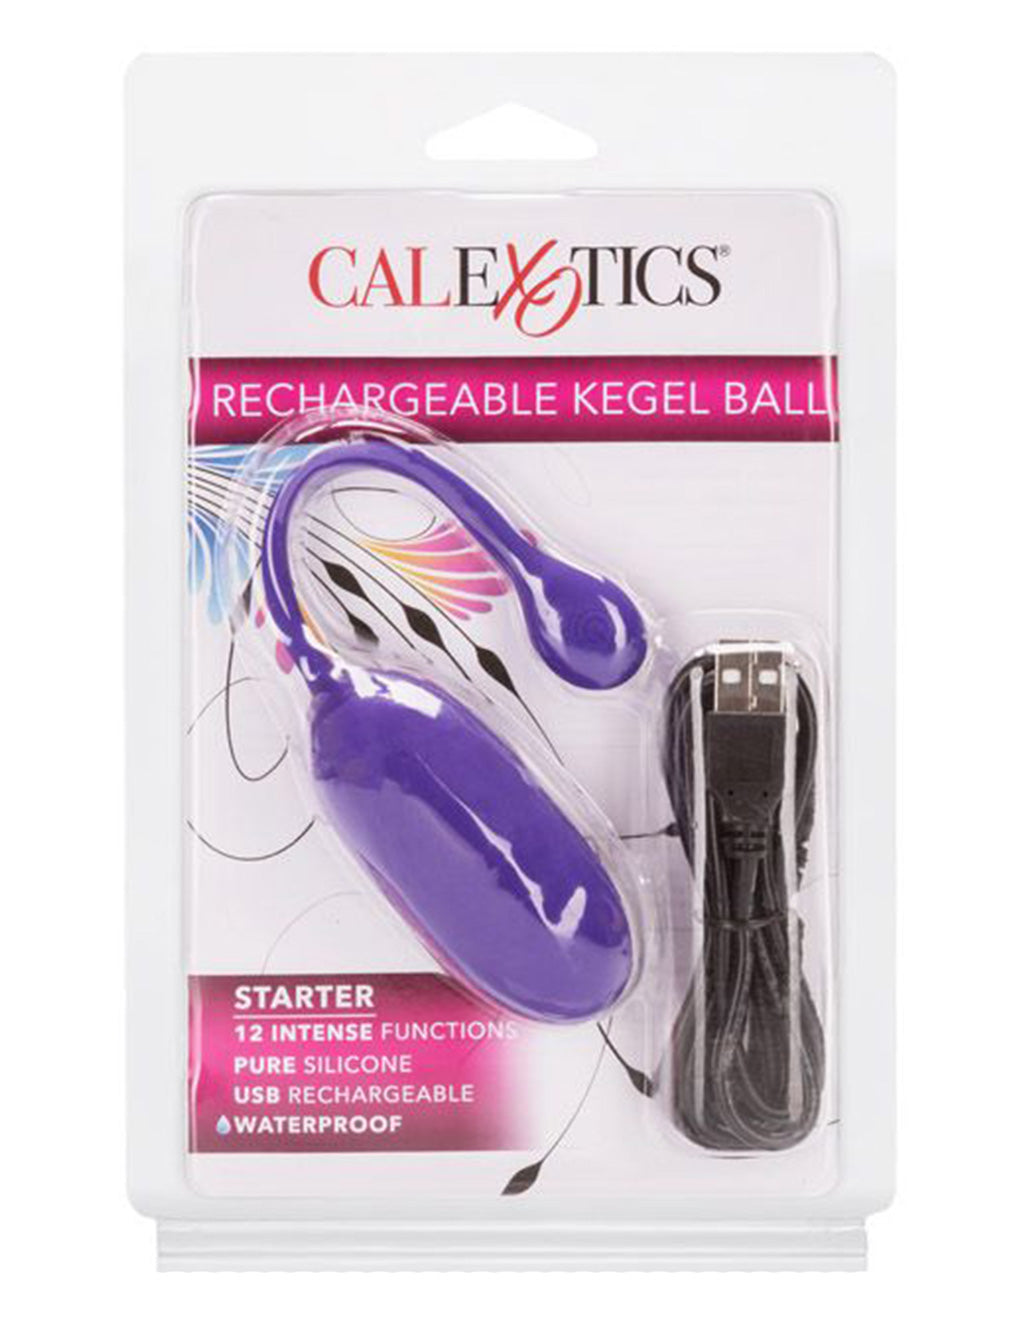 Cal Exotics Starter Rechargeable Kegel Ball package front